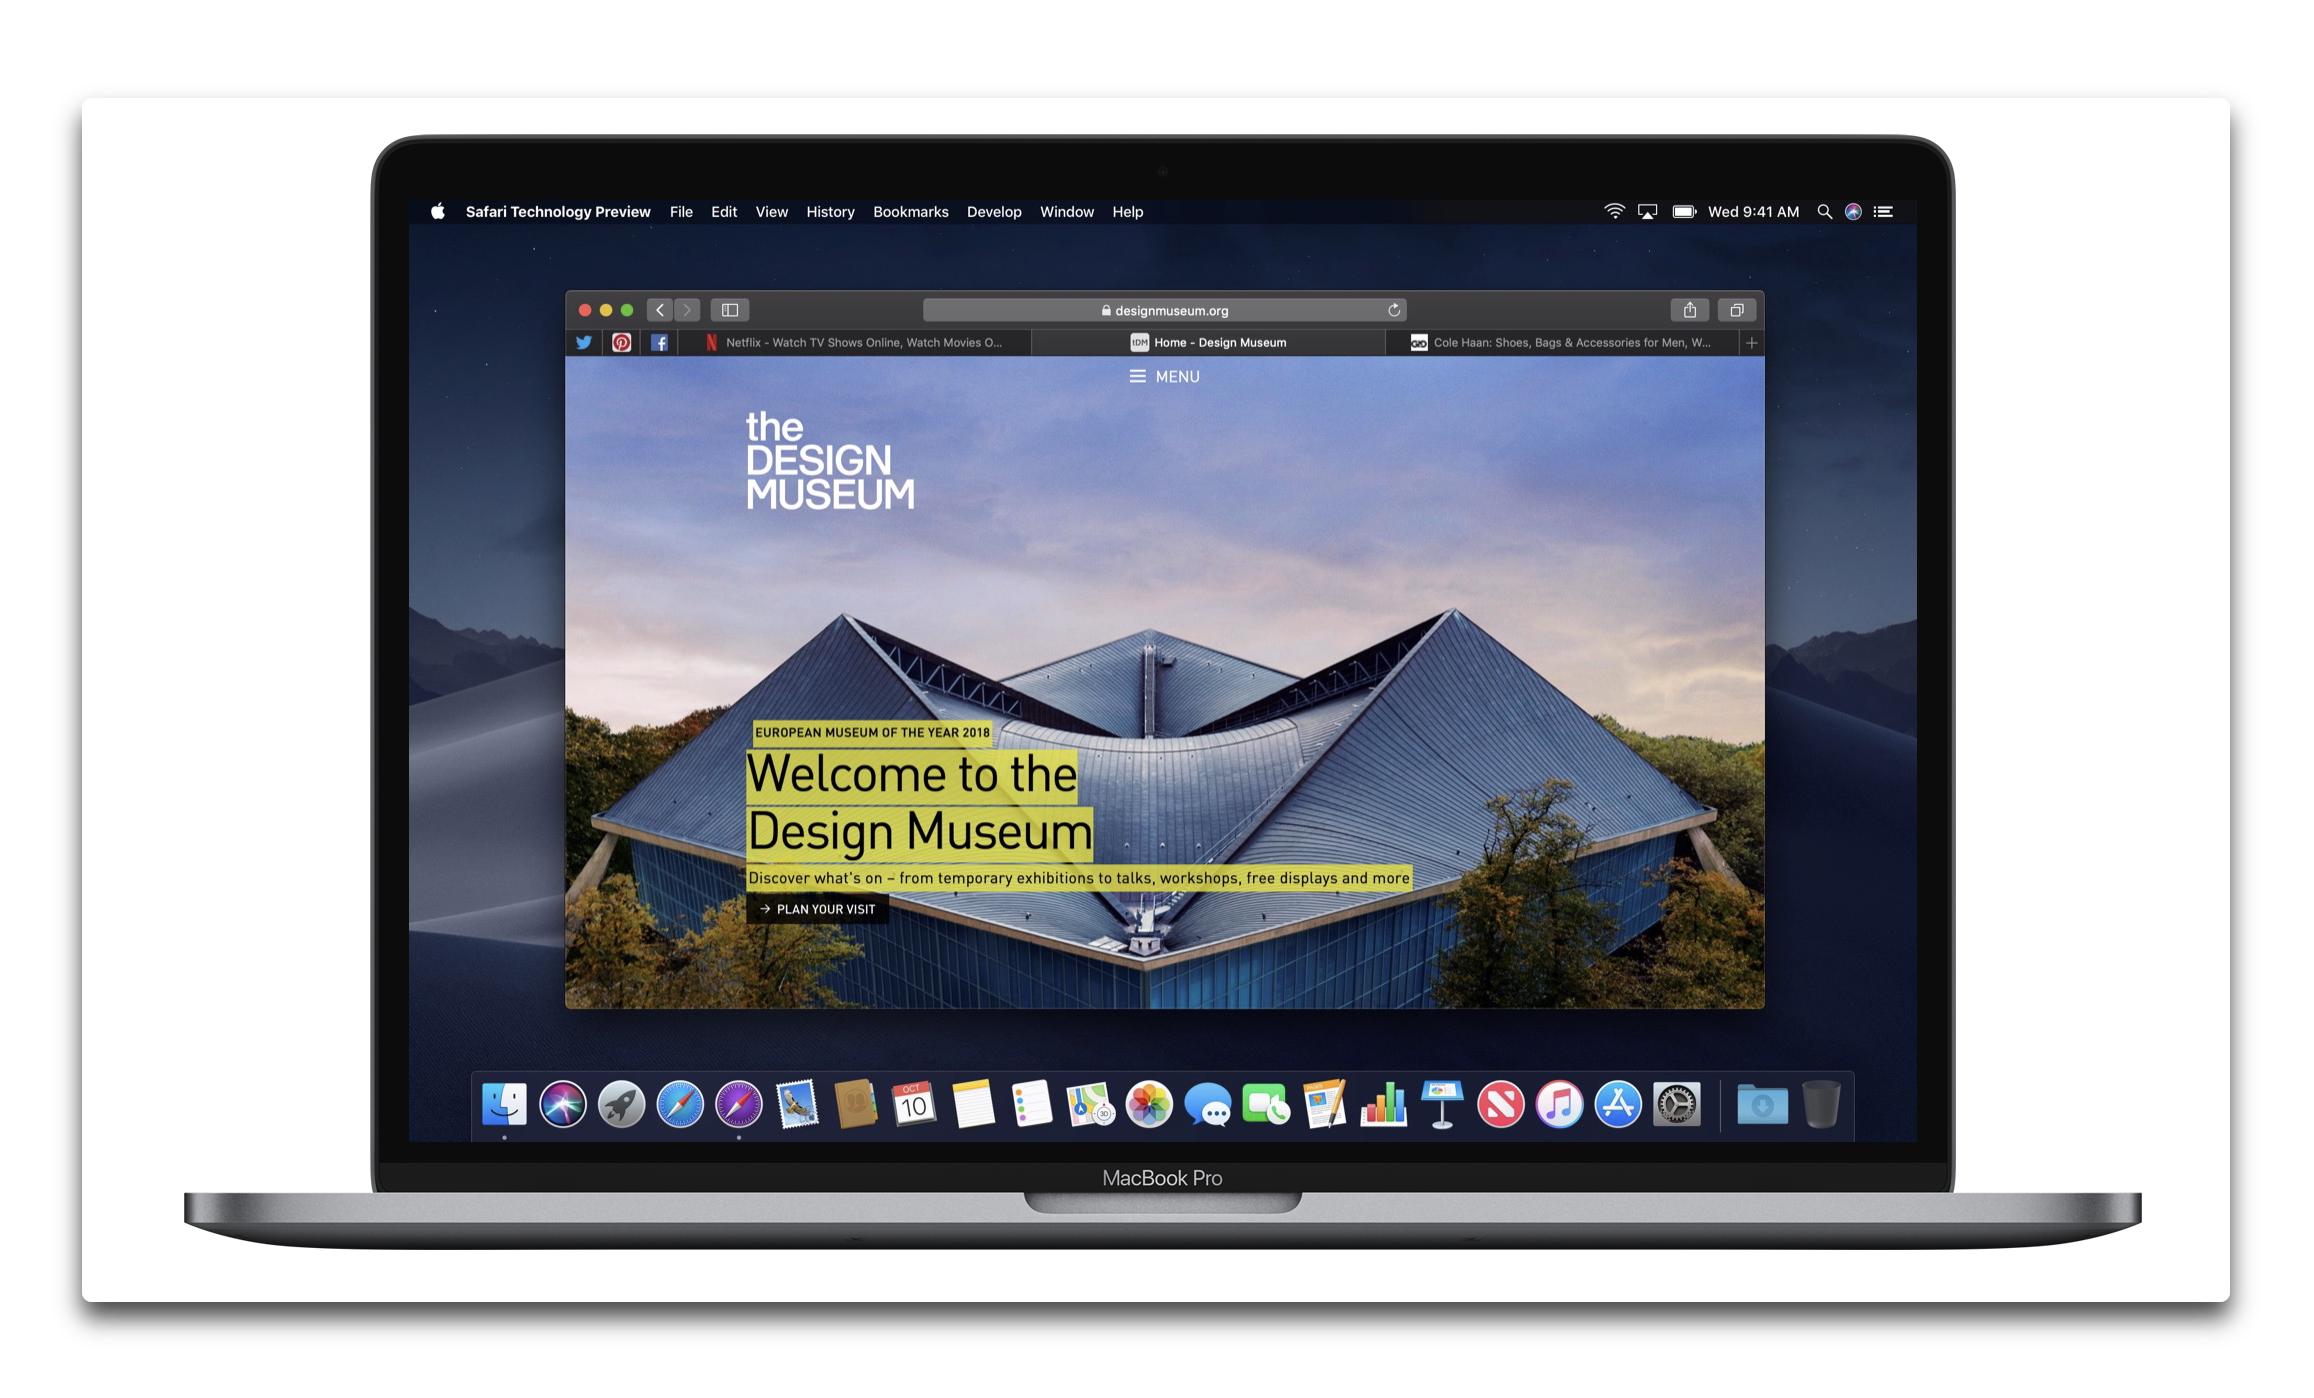 【Mac】Apple，「Safari Technology Preview Release 78」を開発者にリリース